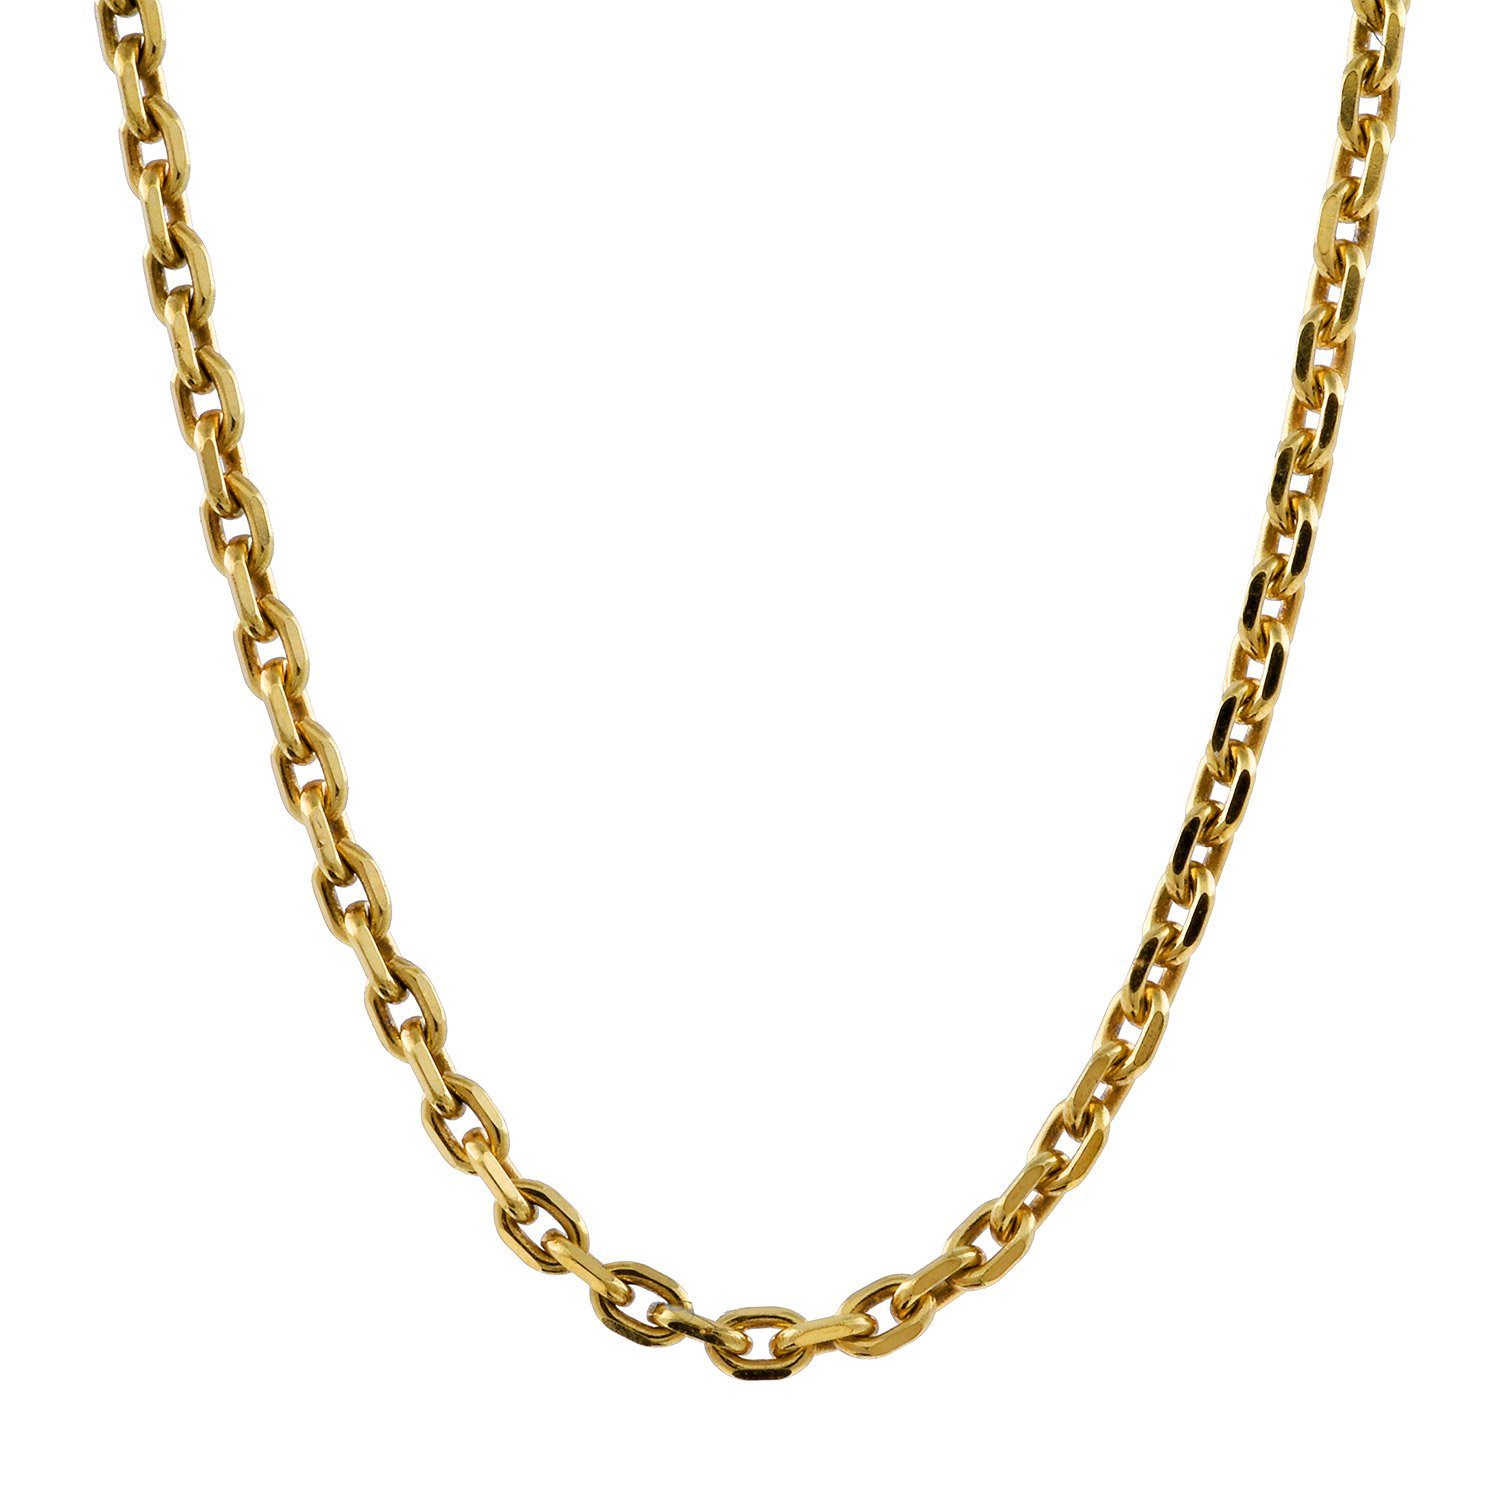 HOPLO Goldkette 1,2 mm 36 cm 333 - 8 Karat Gold Halskette Ankerkette  diamantiert massiv Gold hochwertige Goldkette 1,5 g (inkl. Schmuckbox),  Made in Germany